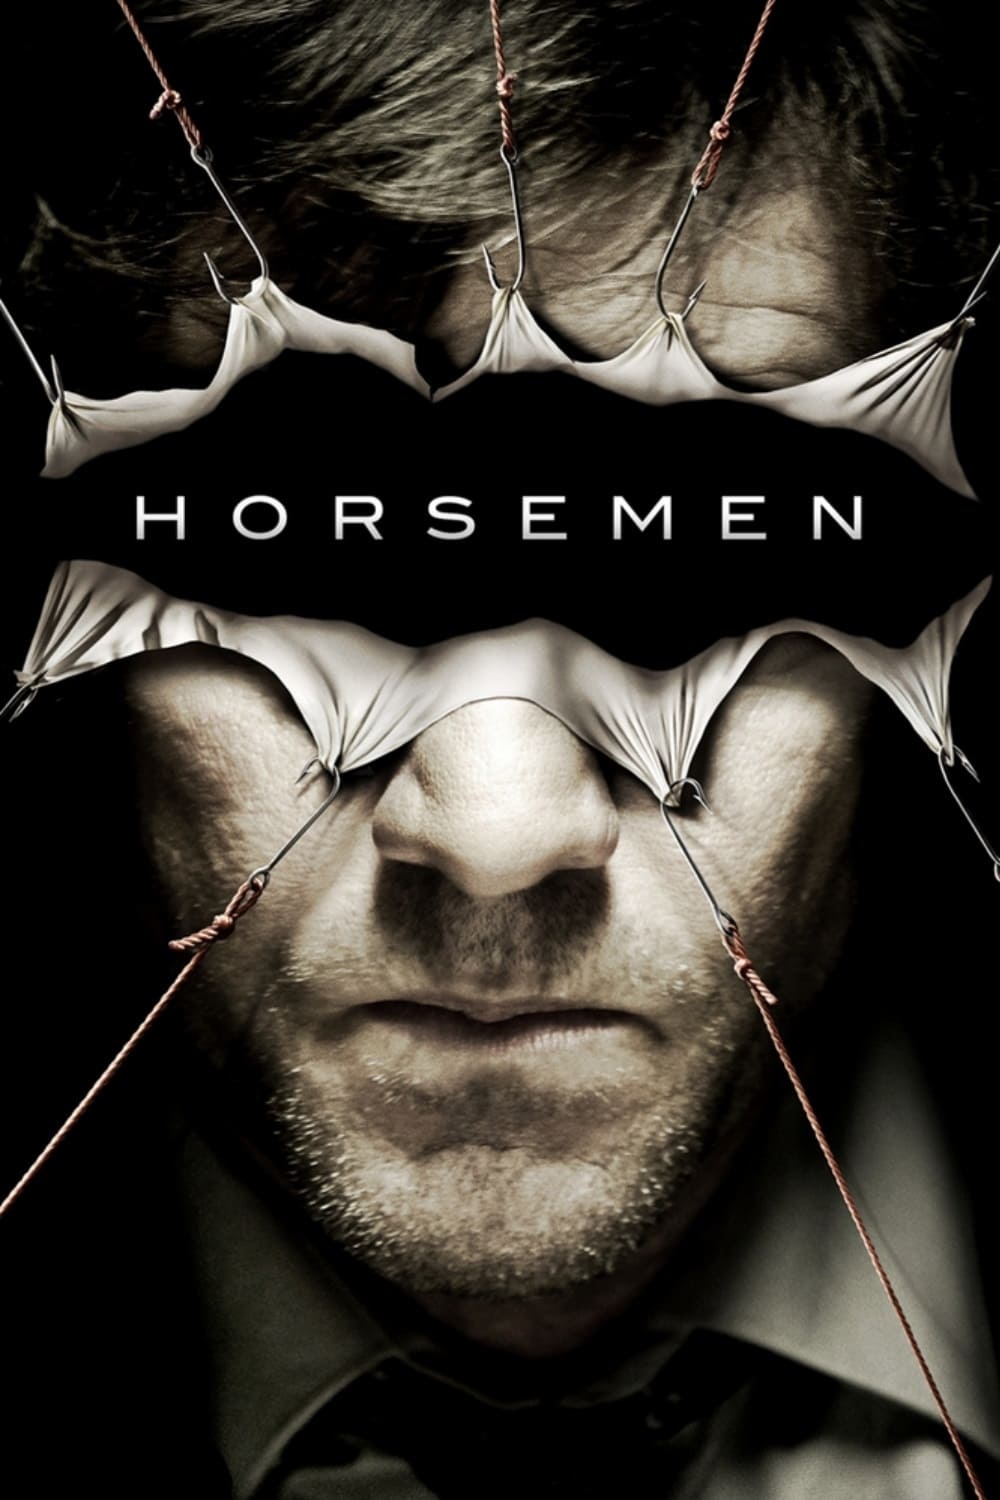 Plakat von "Horsemen"